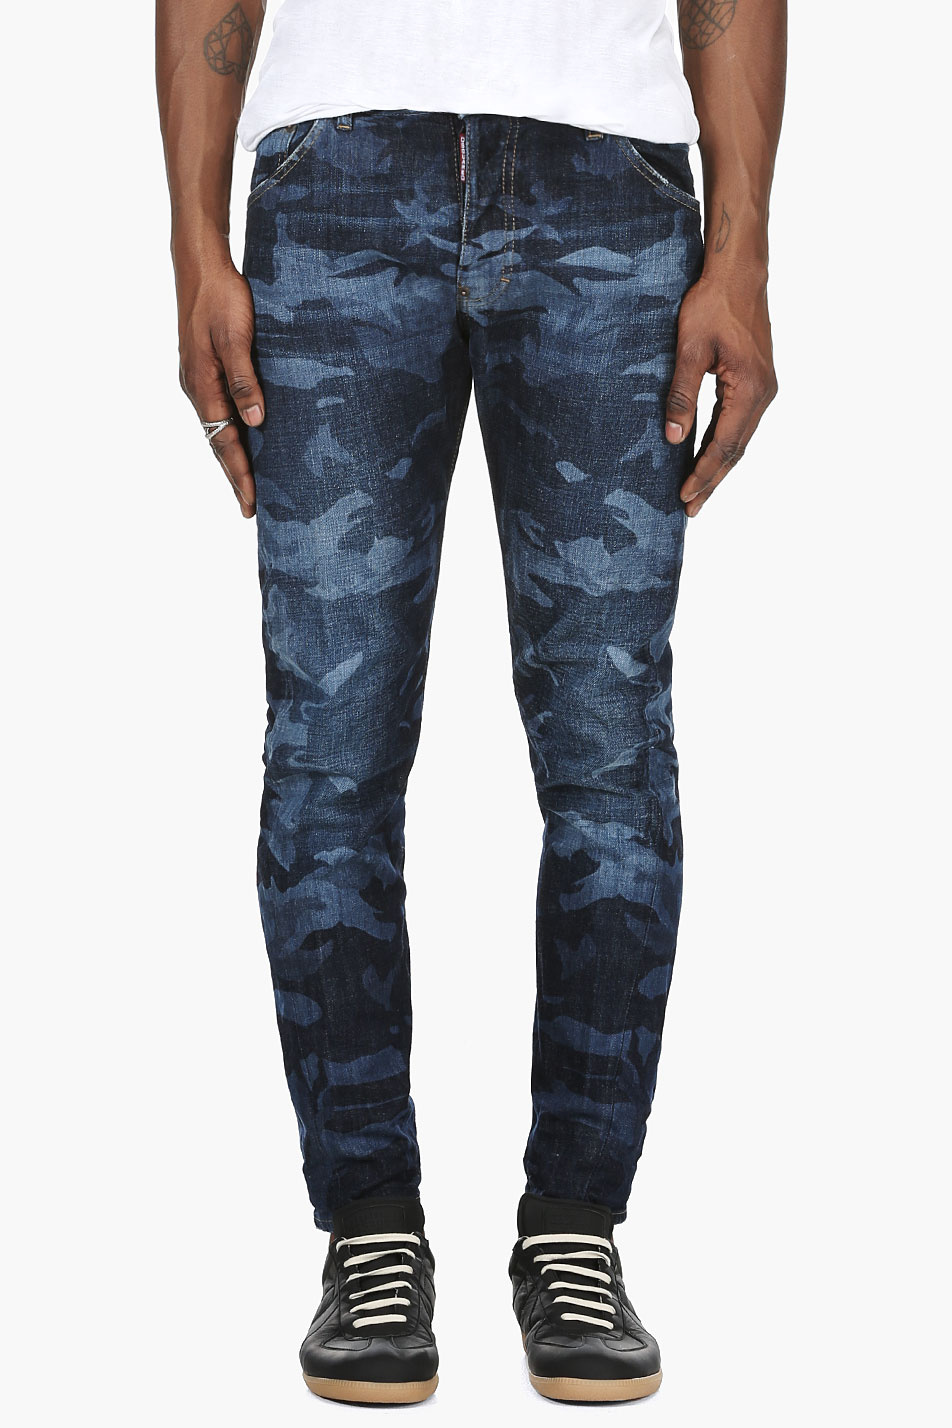 DSquared² Blue Camo Jeans for Men - Lyst